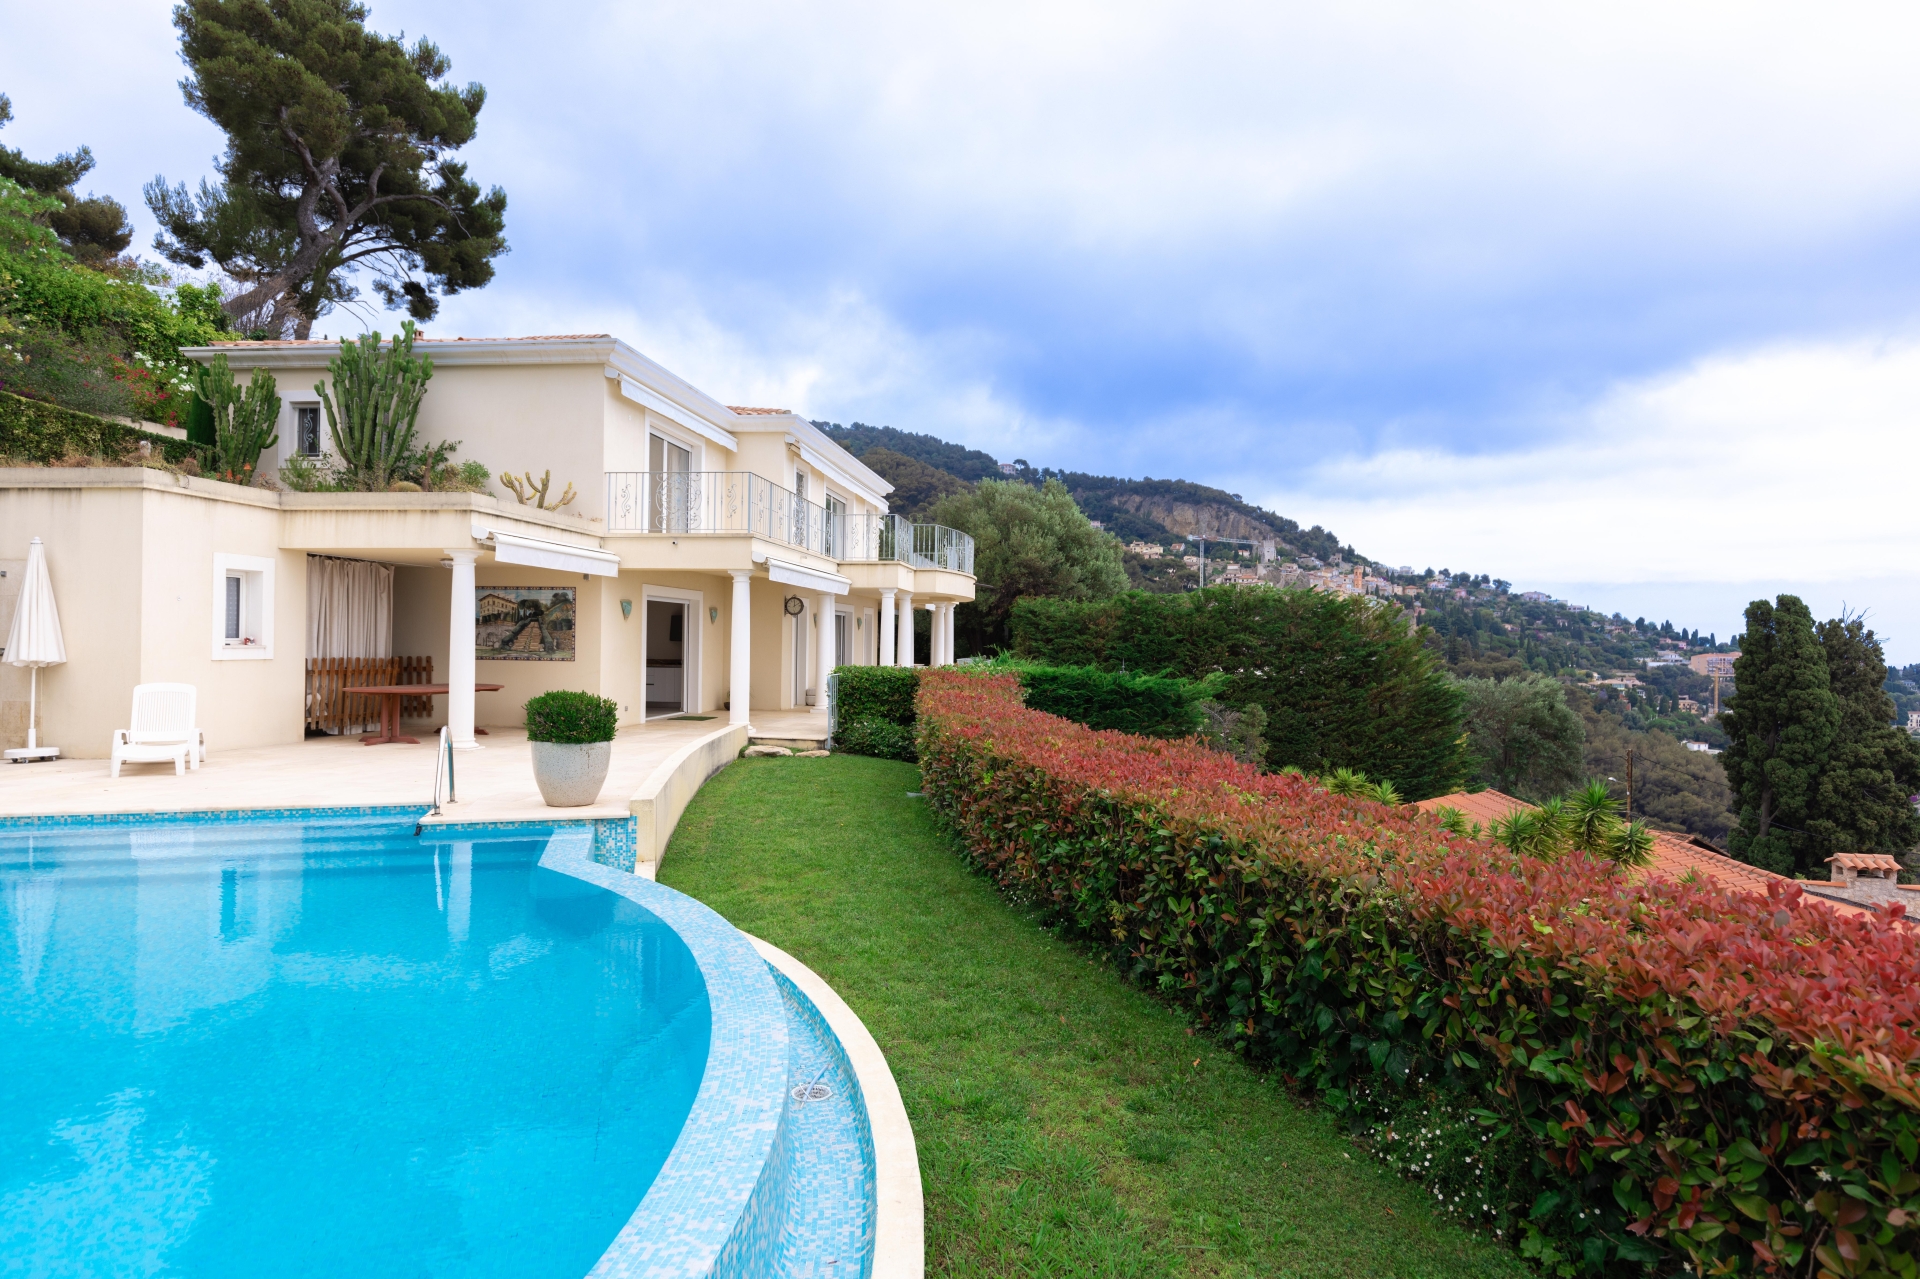 Dotta Villa for sale - MARIE-CLAIRE - Roquebrune-Cap-Martin - Roquebrune-Cap-Martin - img074a9649